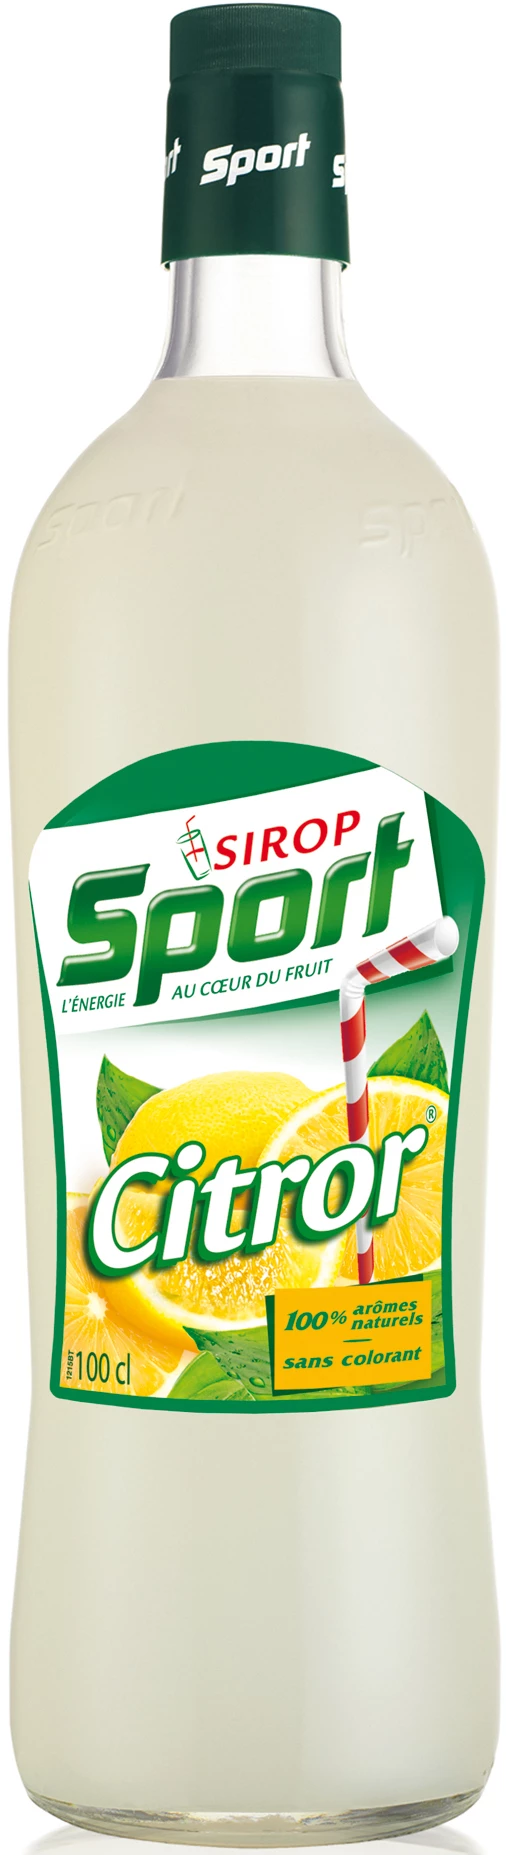 Sirop Sport Citror 1 升